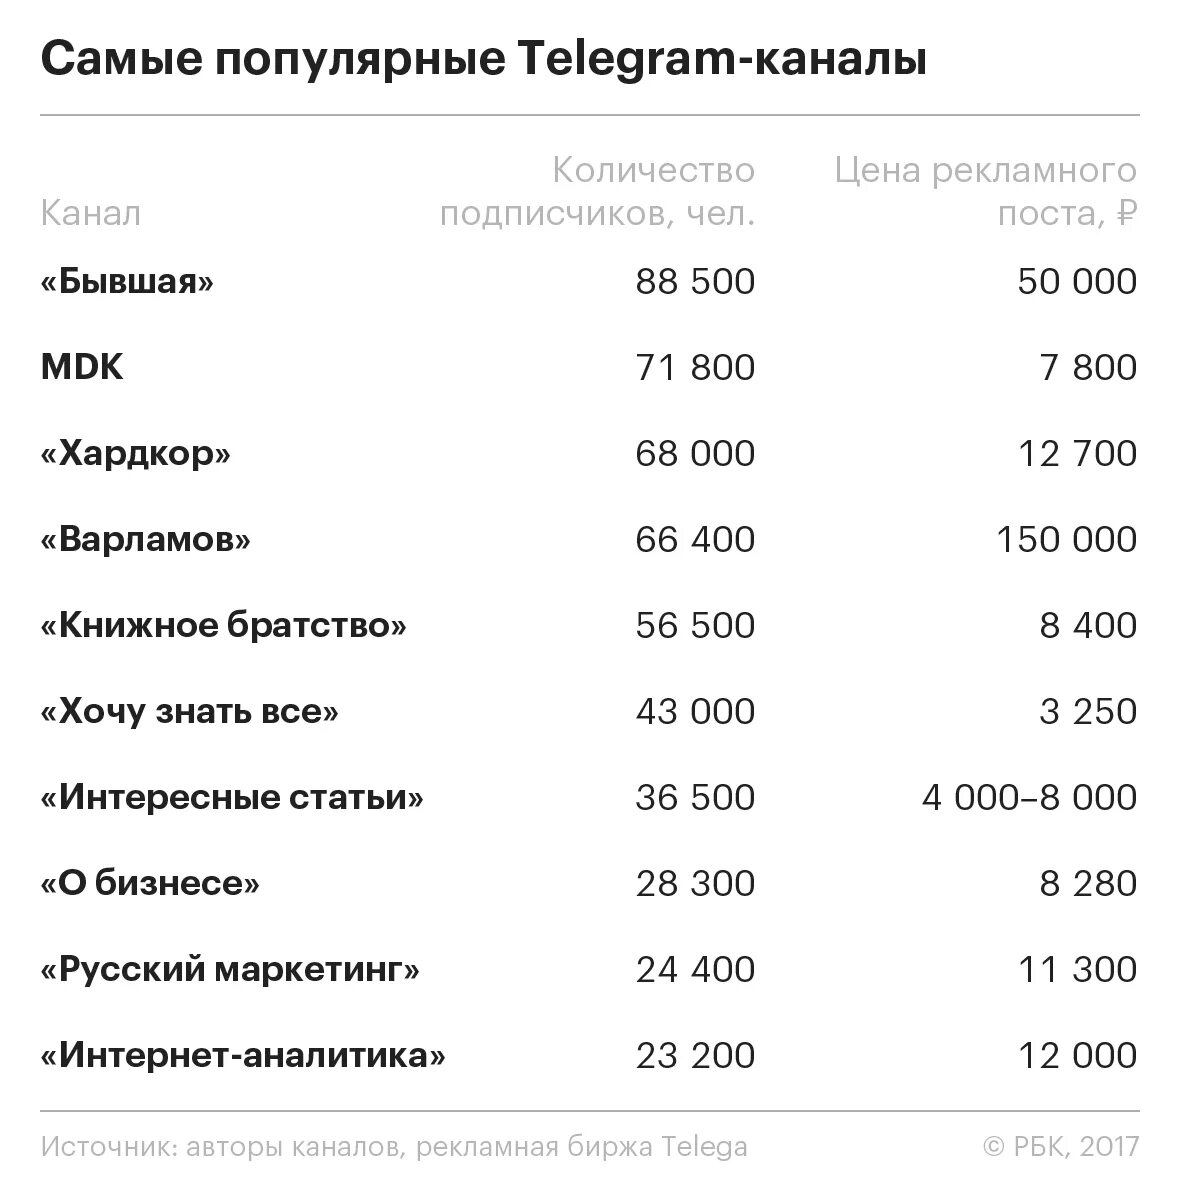 Тг канал читать. Самый популярный Telegram канал. Популярные телеграм каналы. Самые популярные телеграм каналы. Популярныемканалы телеграм.